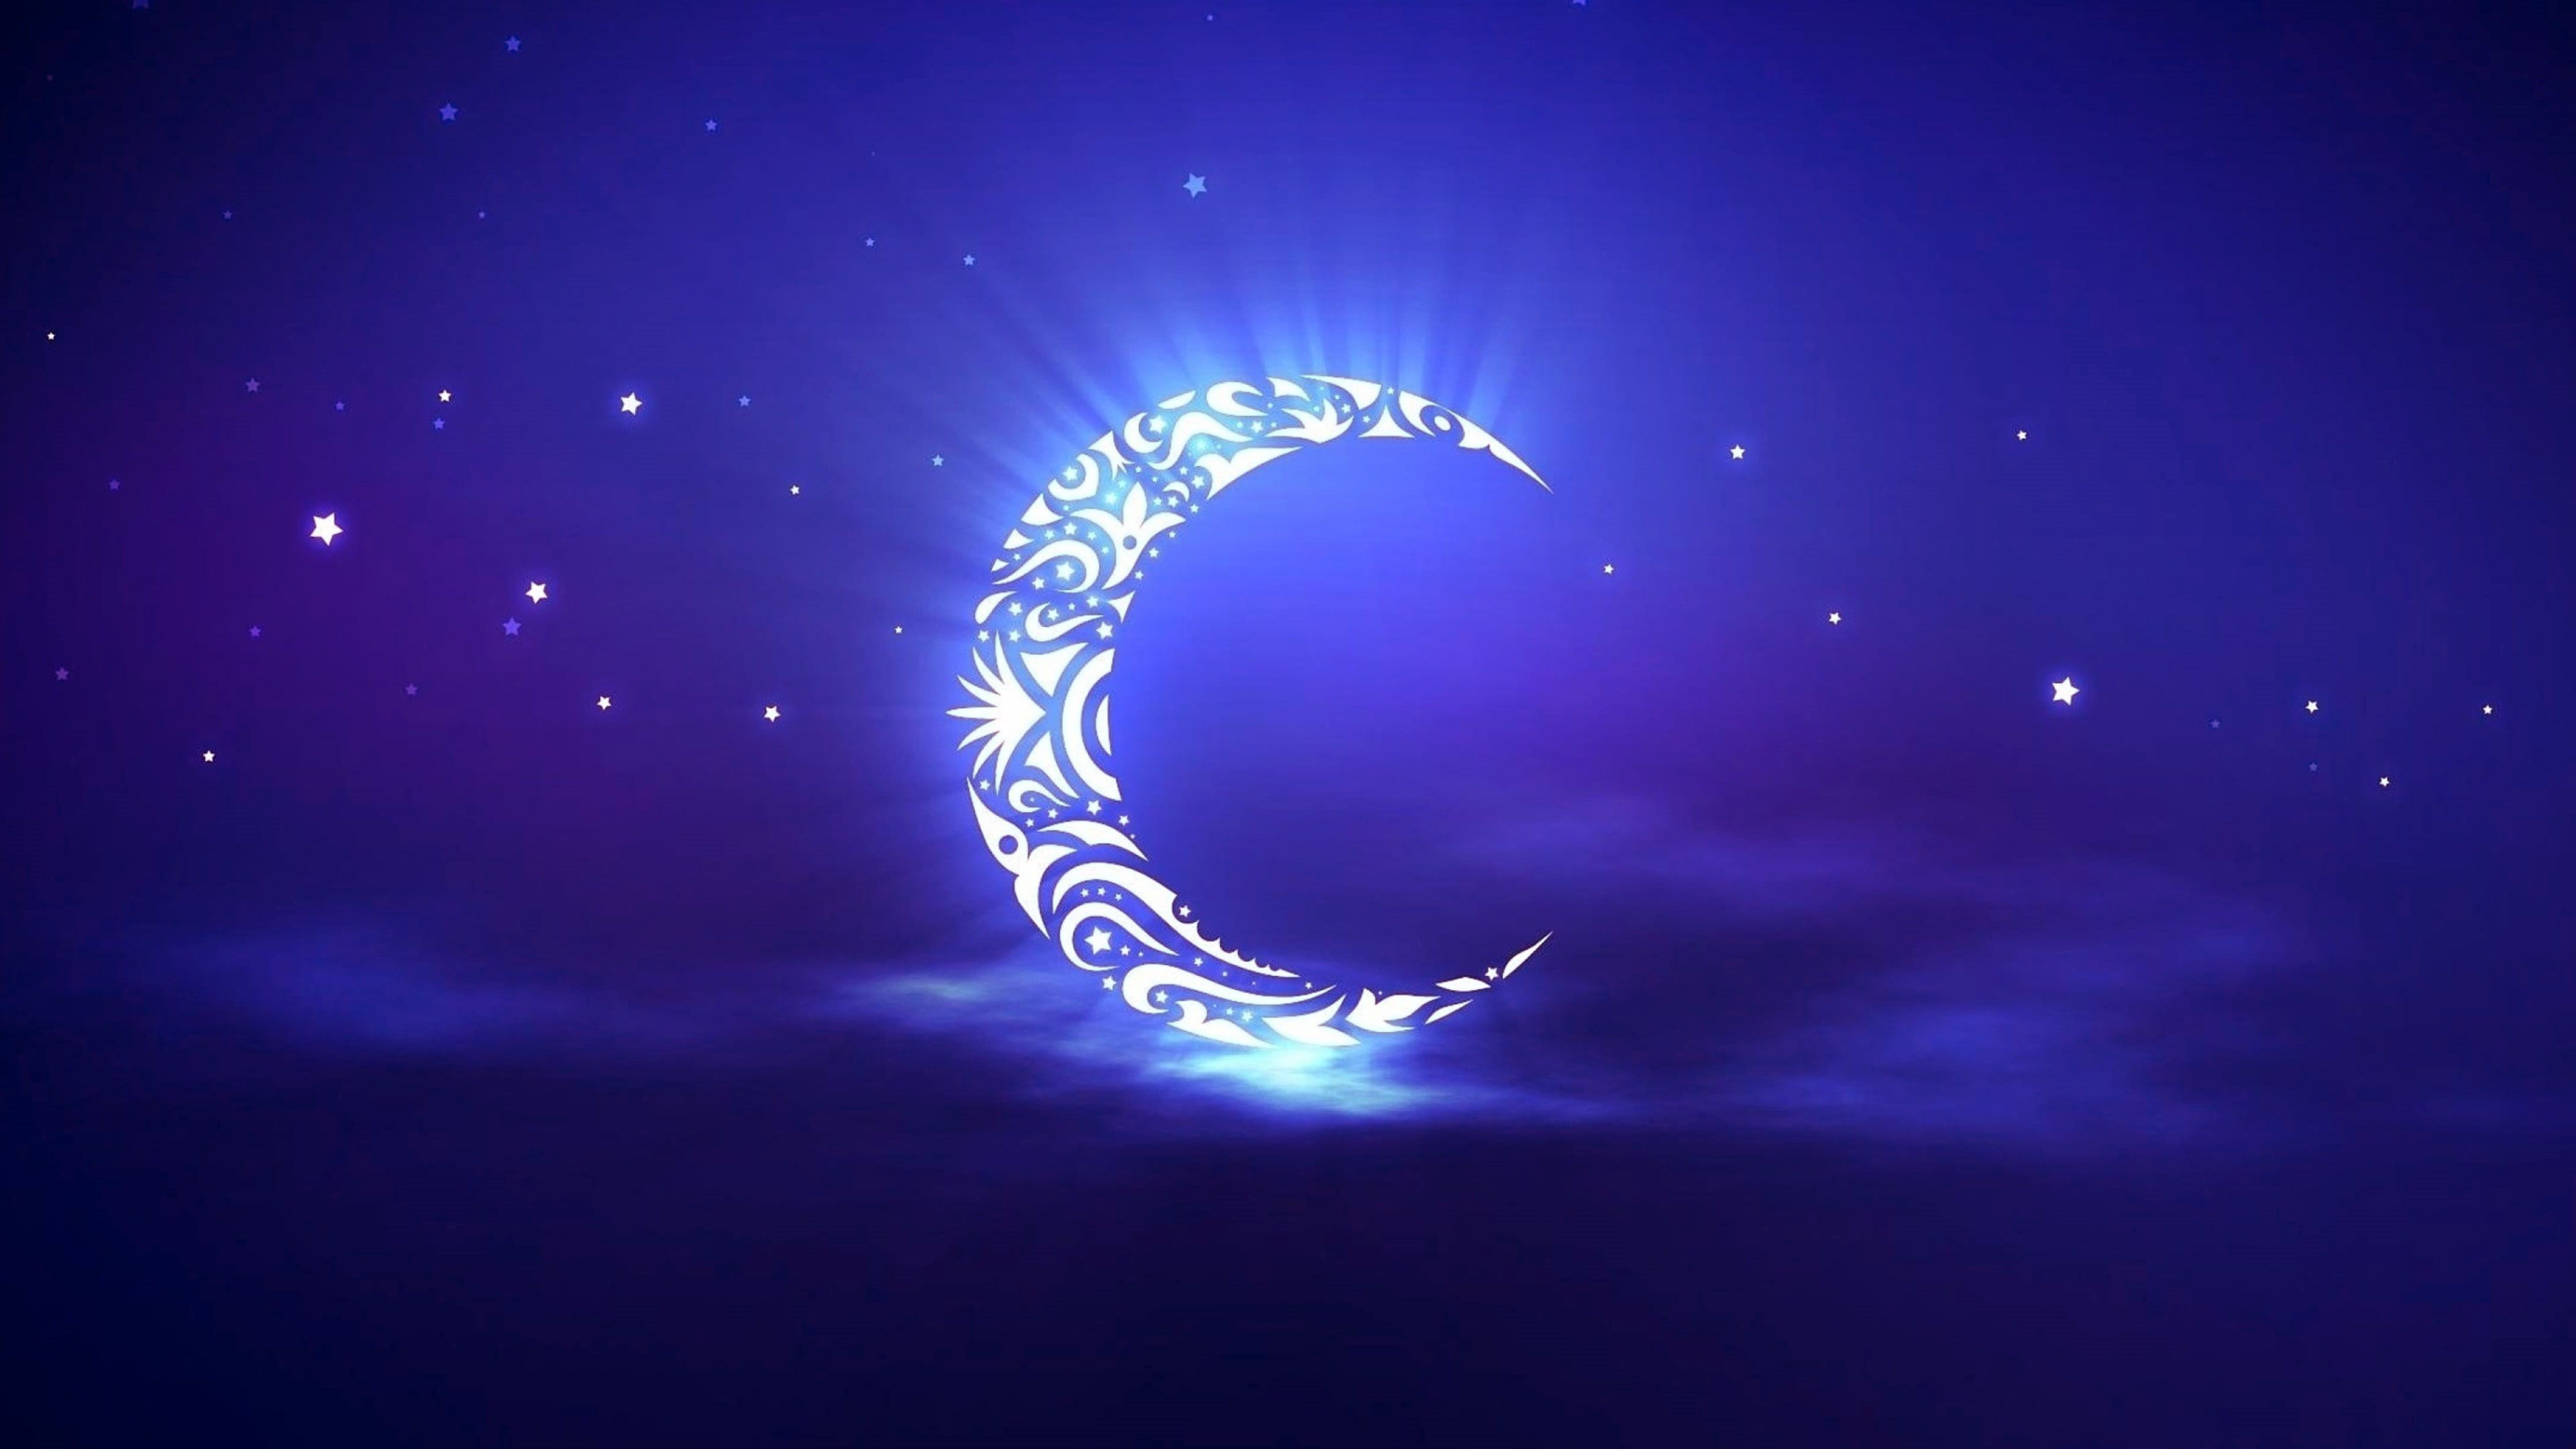 ramadan #islamic #islam #moon #night #moonlight K #wallpaper #hdwallpaper #desktopk wallpaper for pc, Wallpaper pc, Islamic wallpaper hd